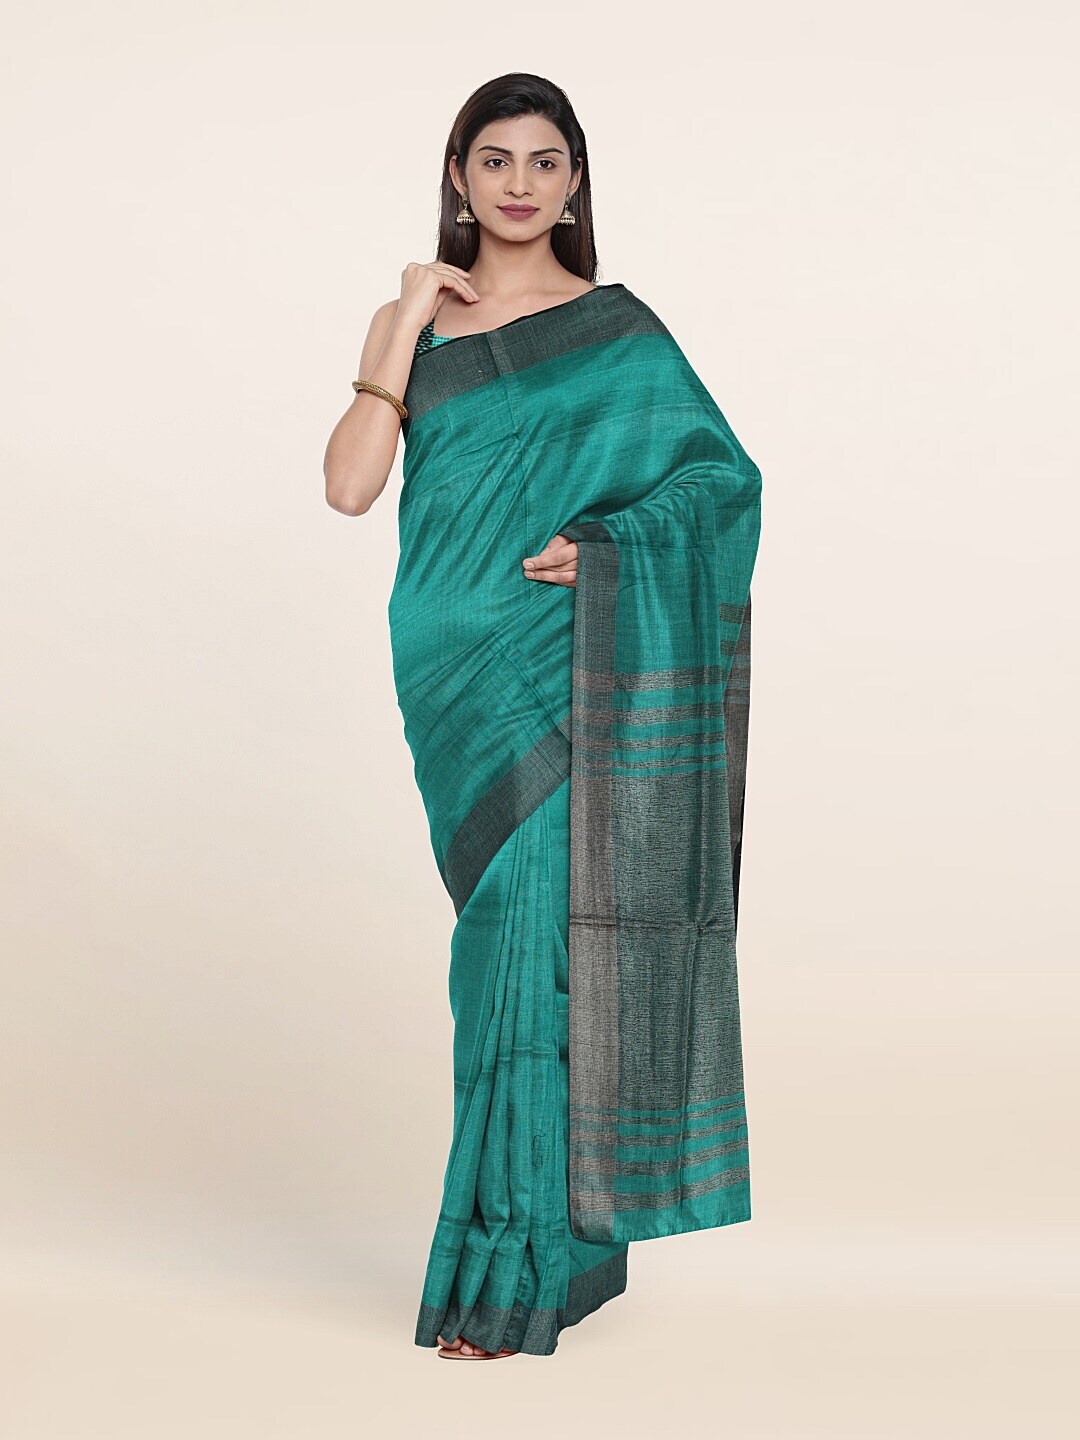 Pothys Green & Grey Zari Linen Blend Saree Price in India